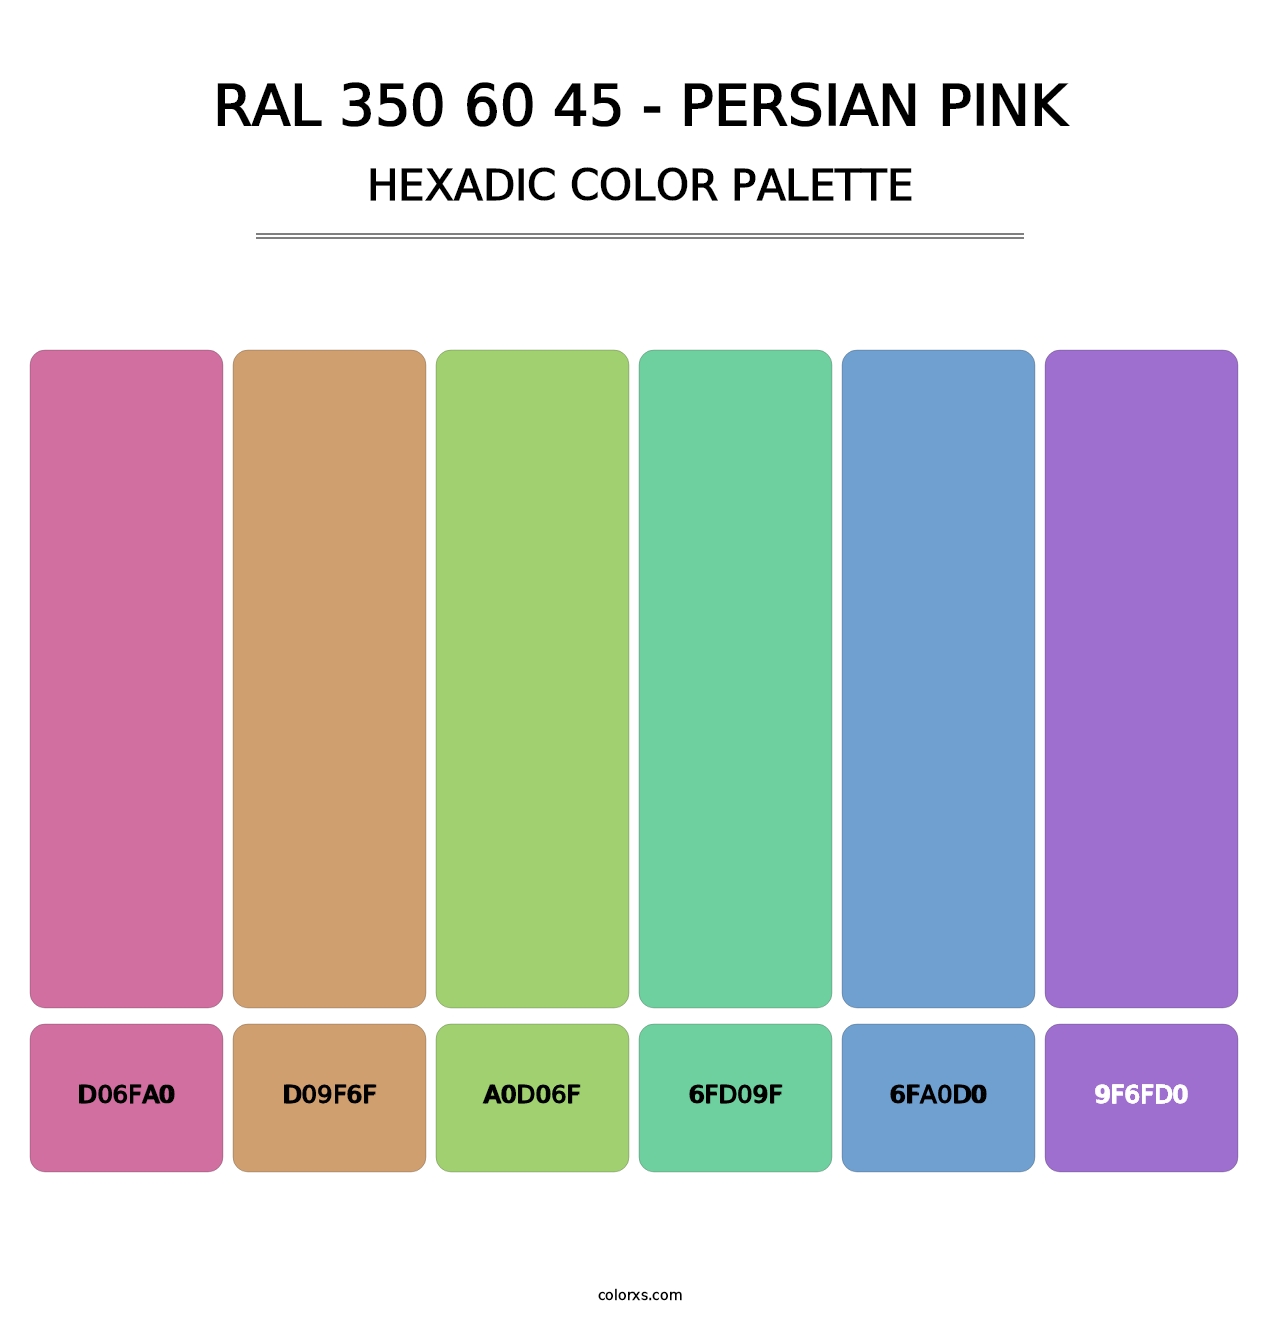 RAL 350 60 45 - Persian Pink - Hexadic Color Palette